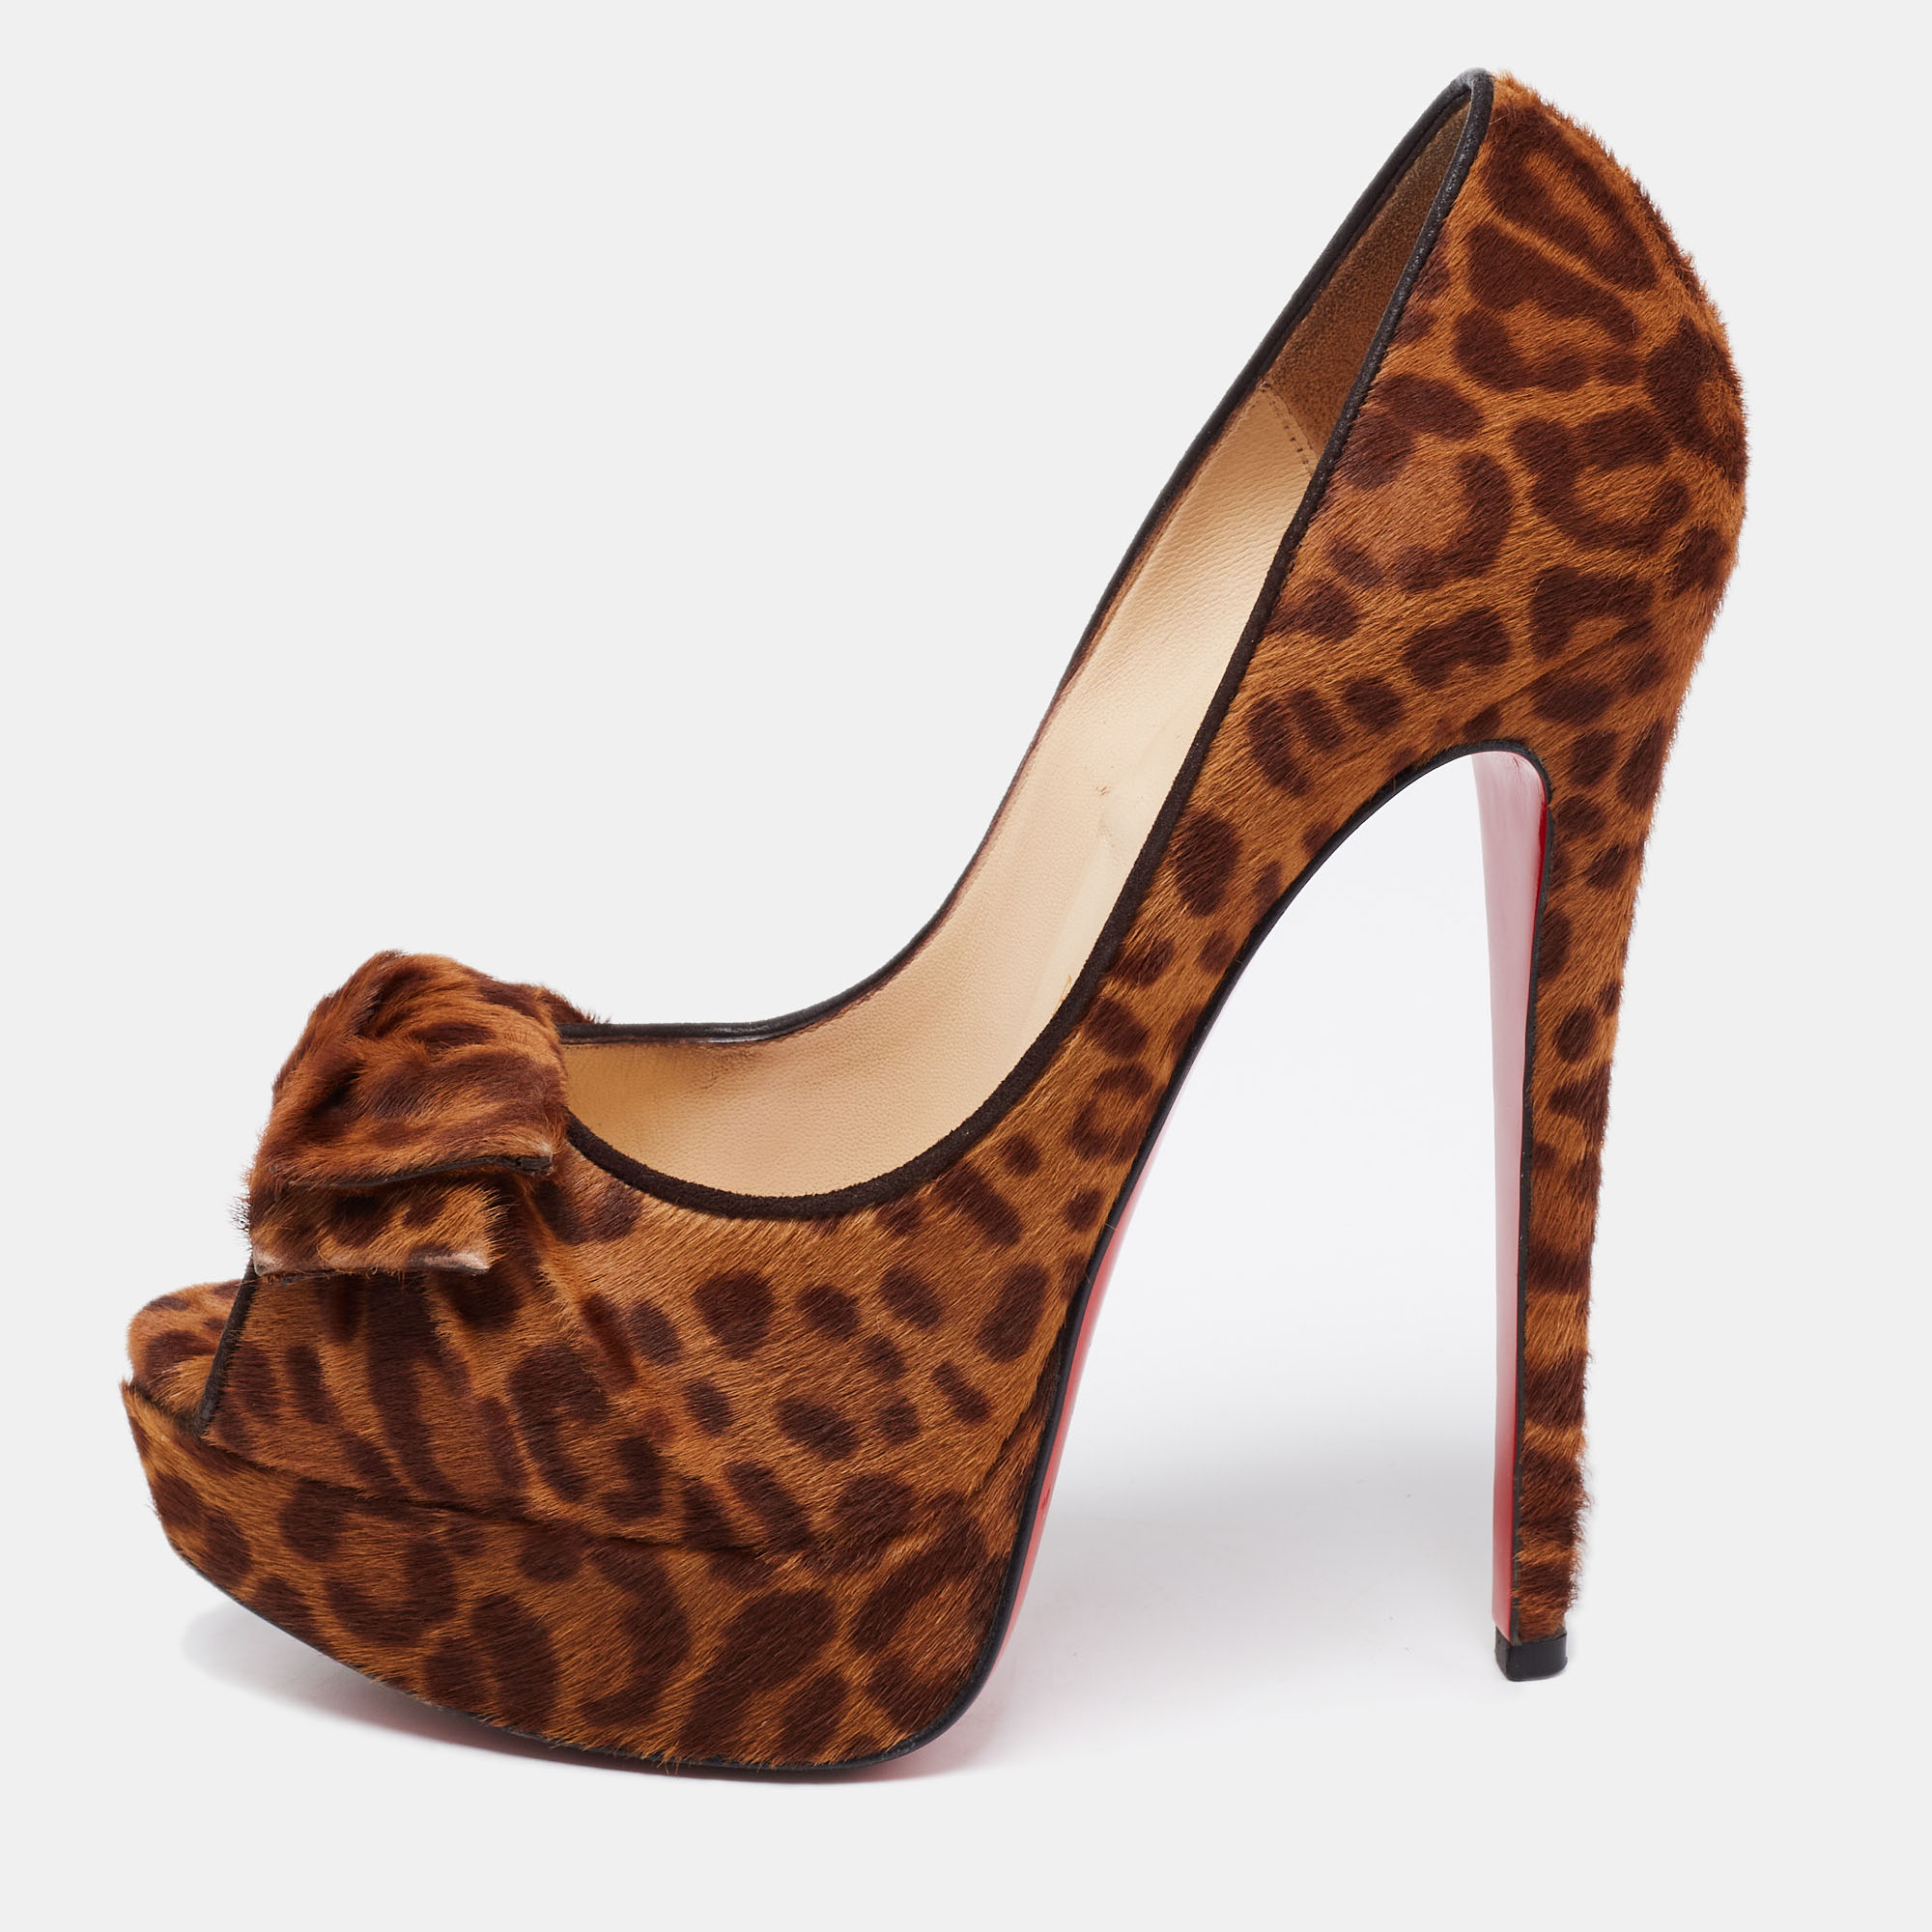 Christian louboutin brown/tan leopard print calf hair bow lady peep-toe platform pumps size 37